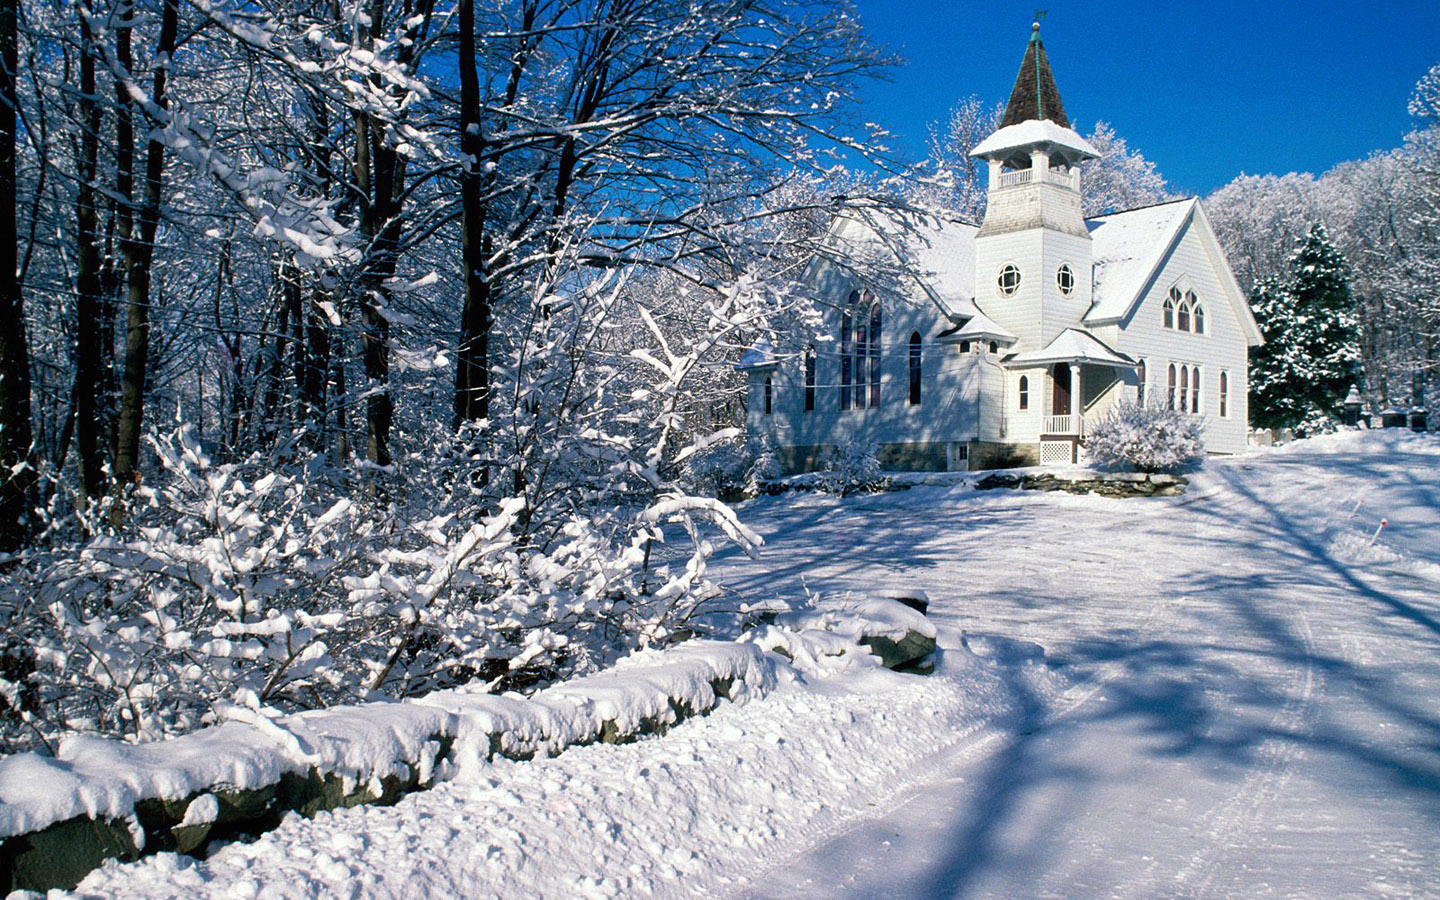 Winter Wonderland Dreamy Snow Scene Wallpaper